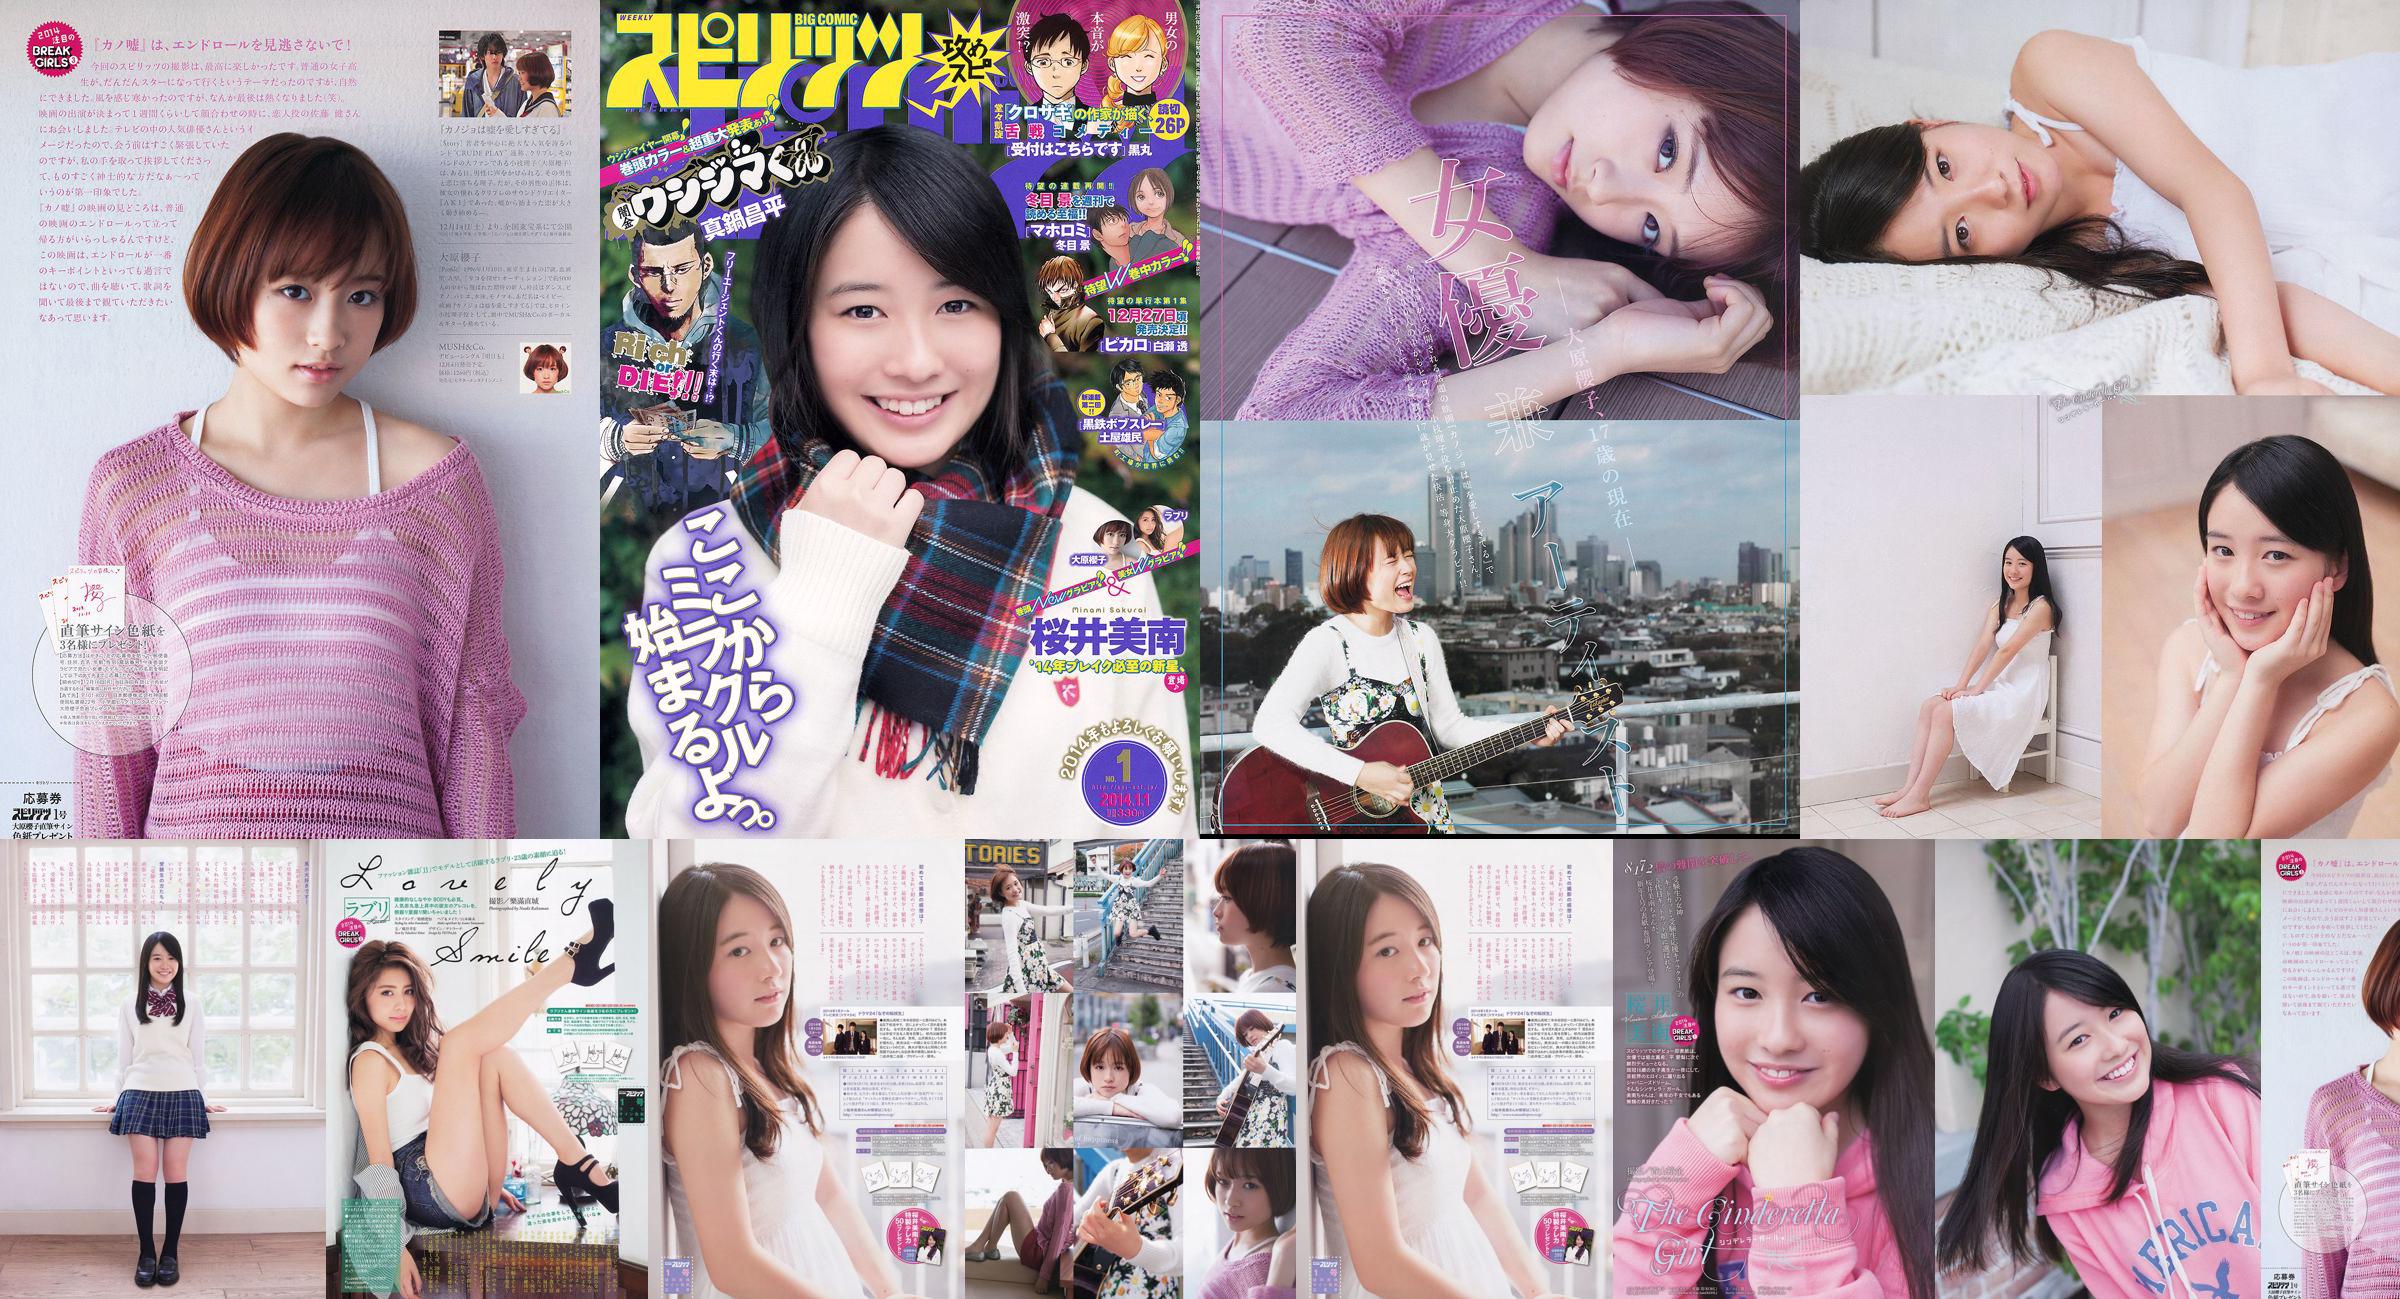 [Grands esprits de la bande dessinée hebdomadaire] Sakurai Minan Ohara Sakurako 2014 Magazine photo n ° 01 No.6f2099 Page 1